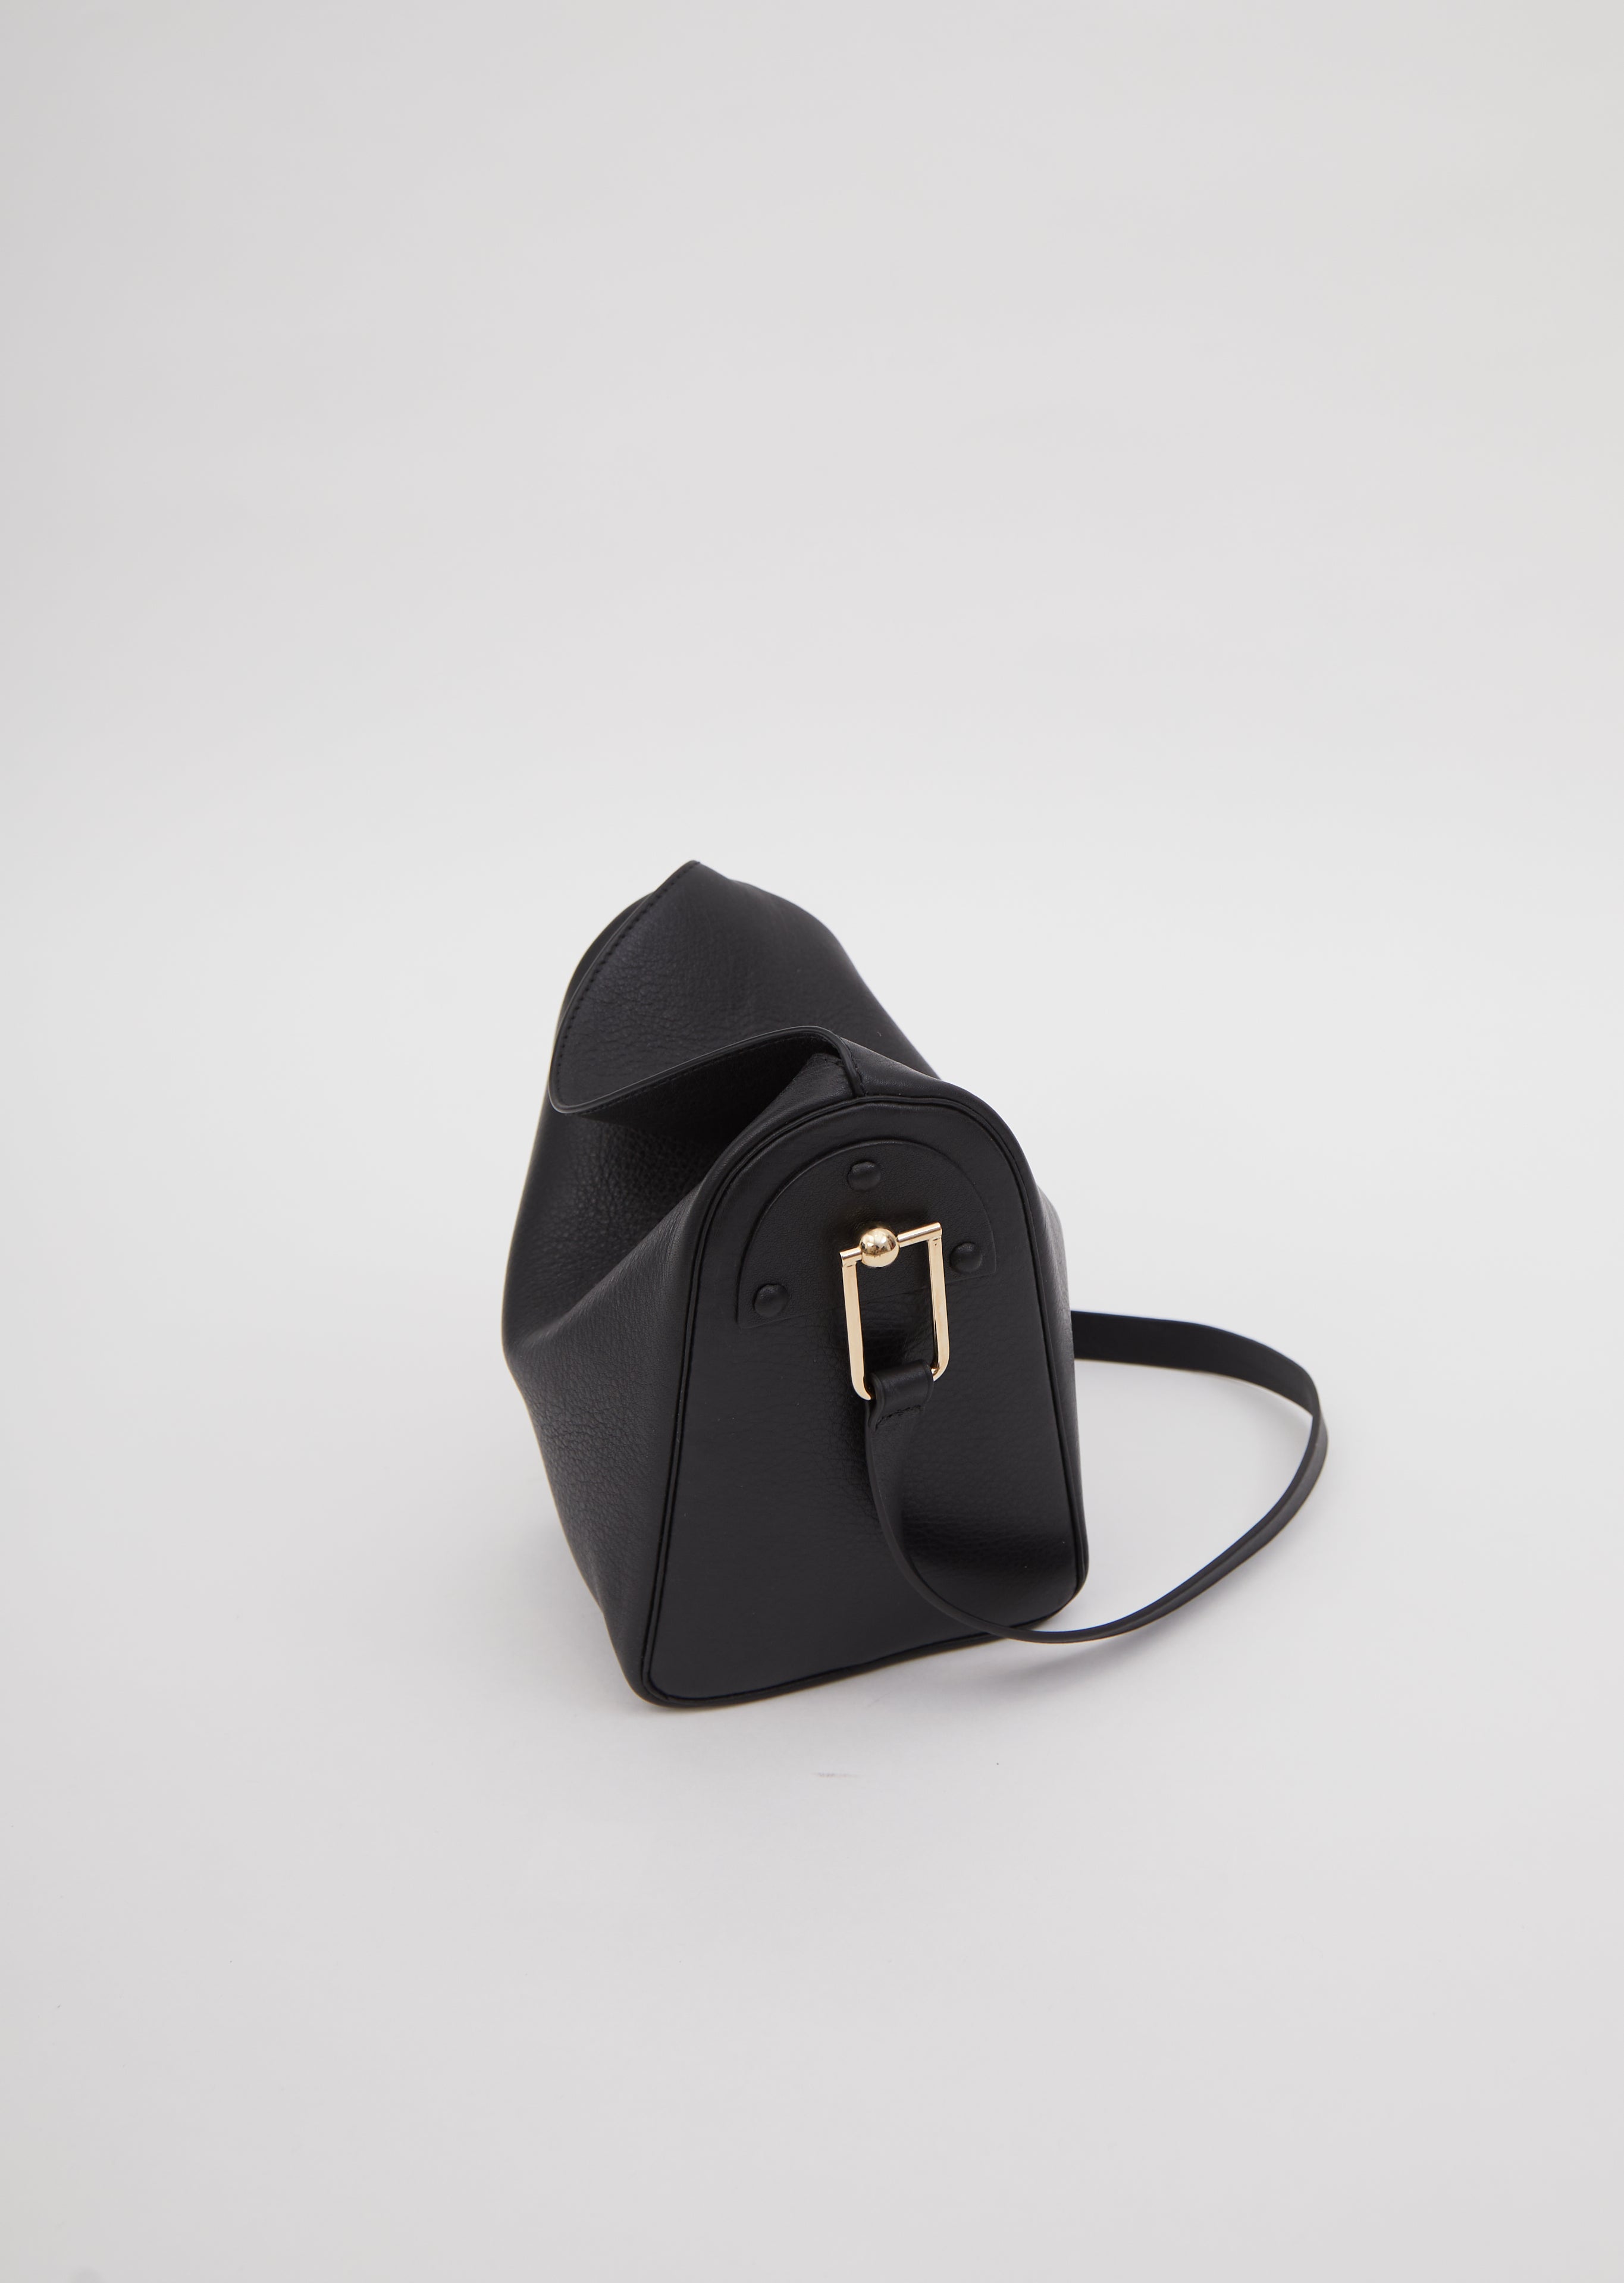 Chain fashion small bag – Link Your Life